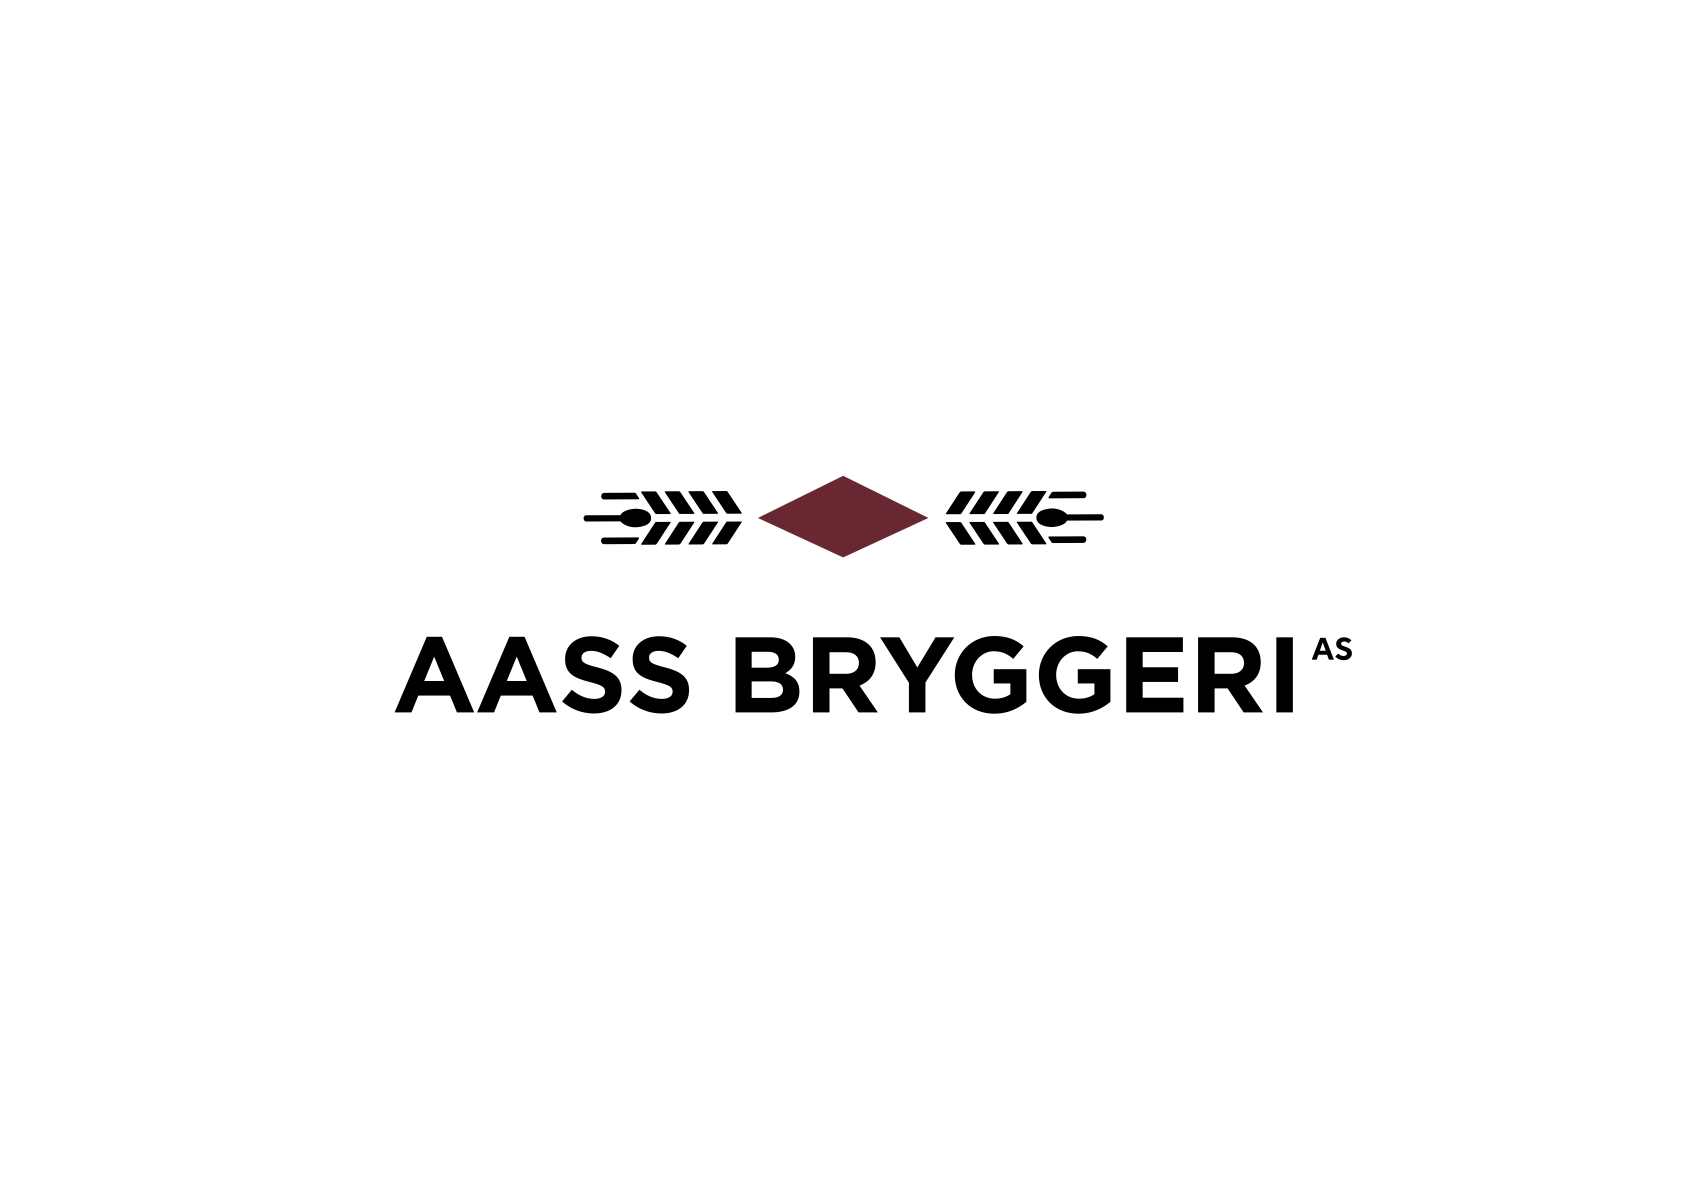 Aass Bryggeri AS - No Logo logo Colour-kopi